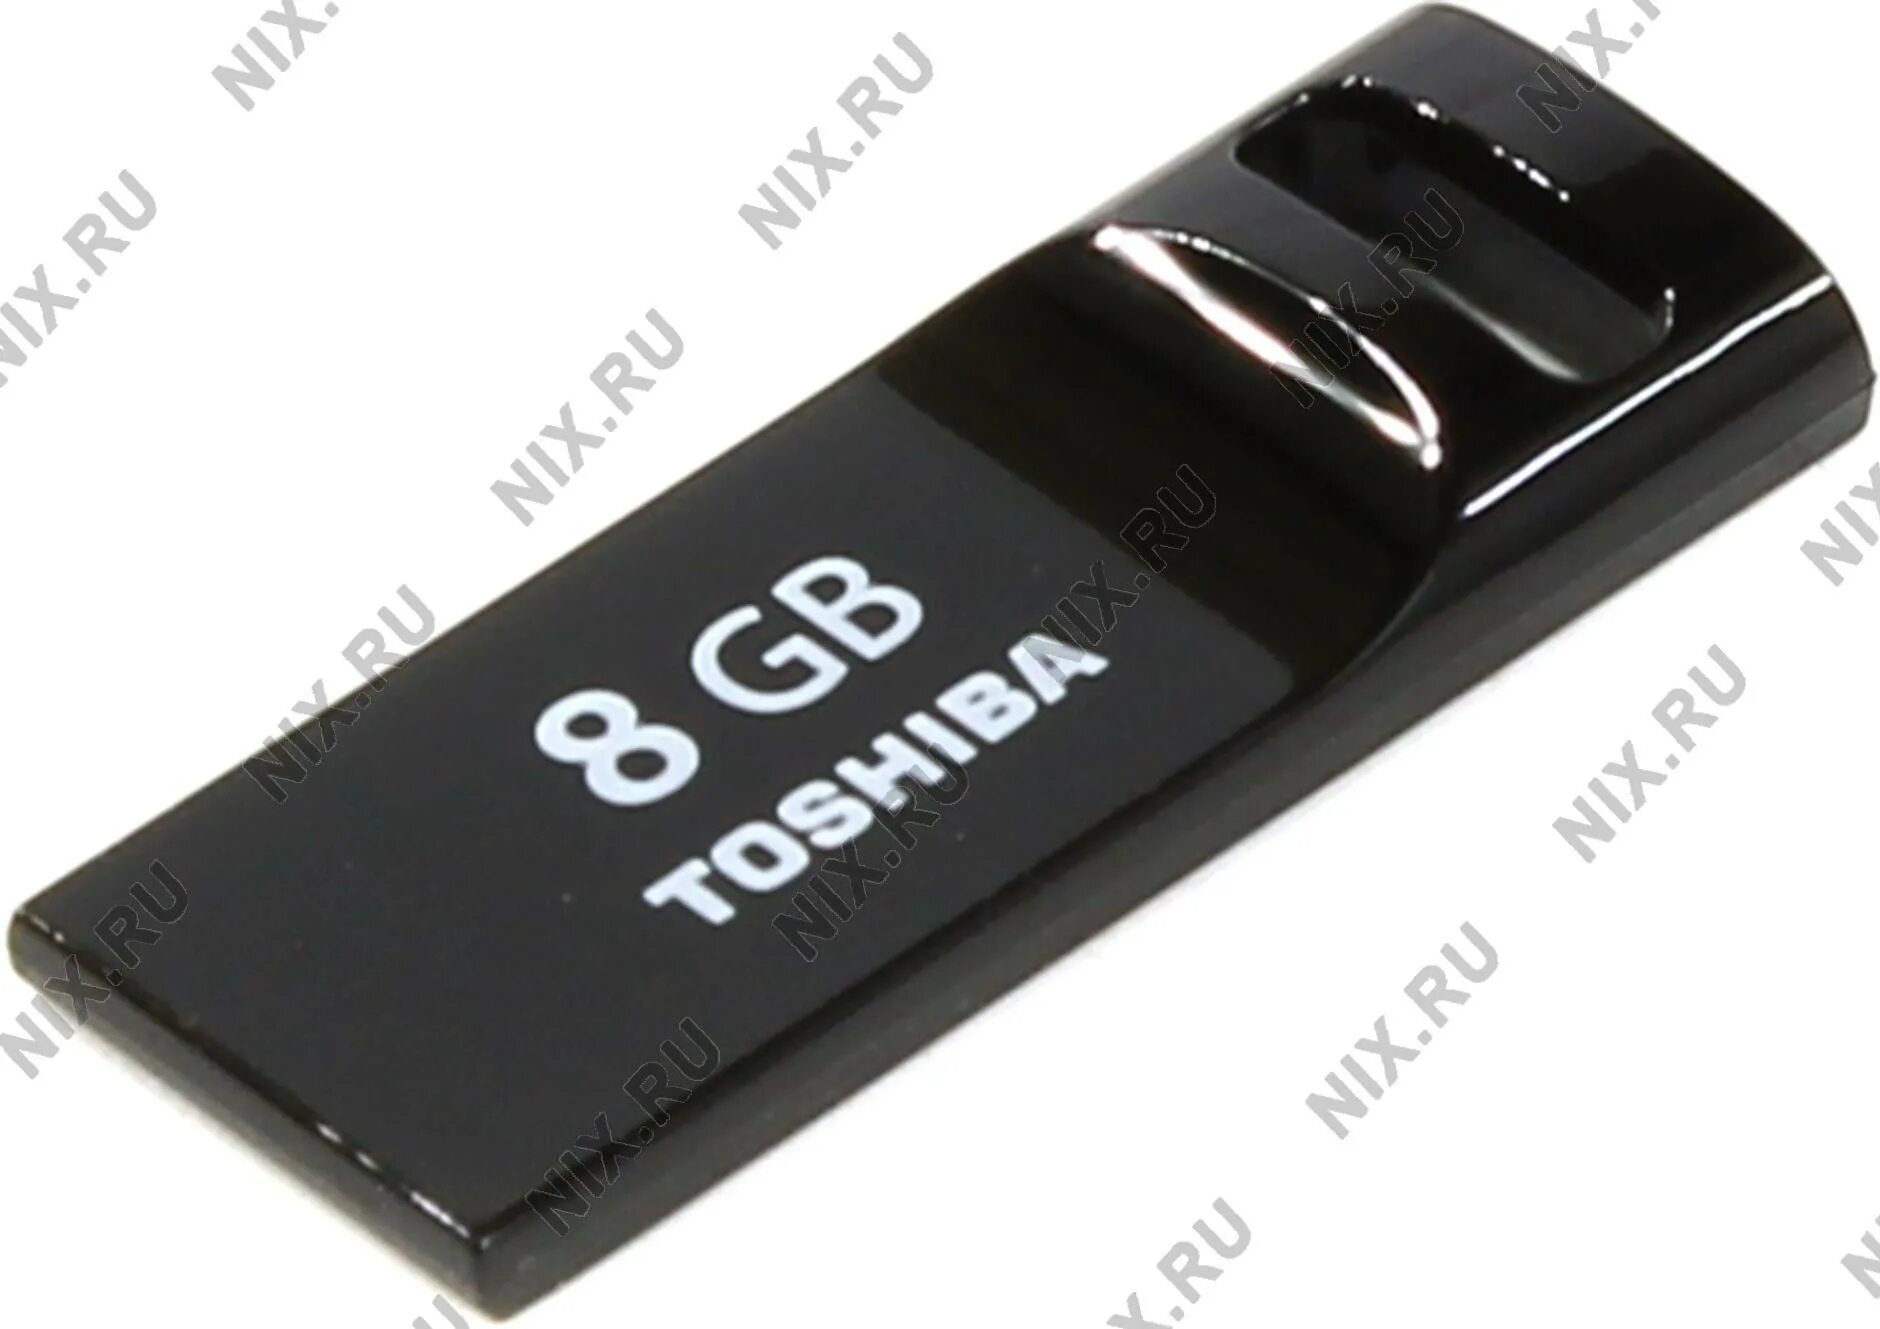 Pro 256gb 8gb. Toshiba флешка 8гб. Флешка Тошиба 8 ГБ. Флешка Тошиба 144314xaa44tapbc2s. Toshiba 8 GB флешка made in Taiwan.